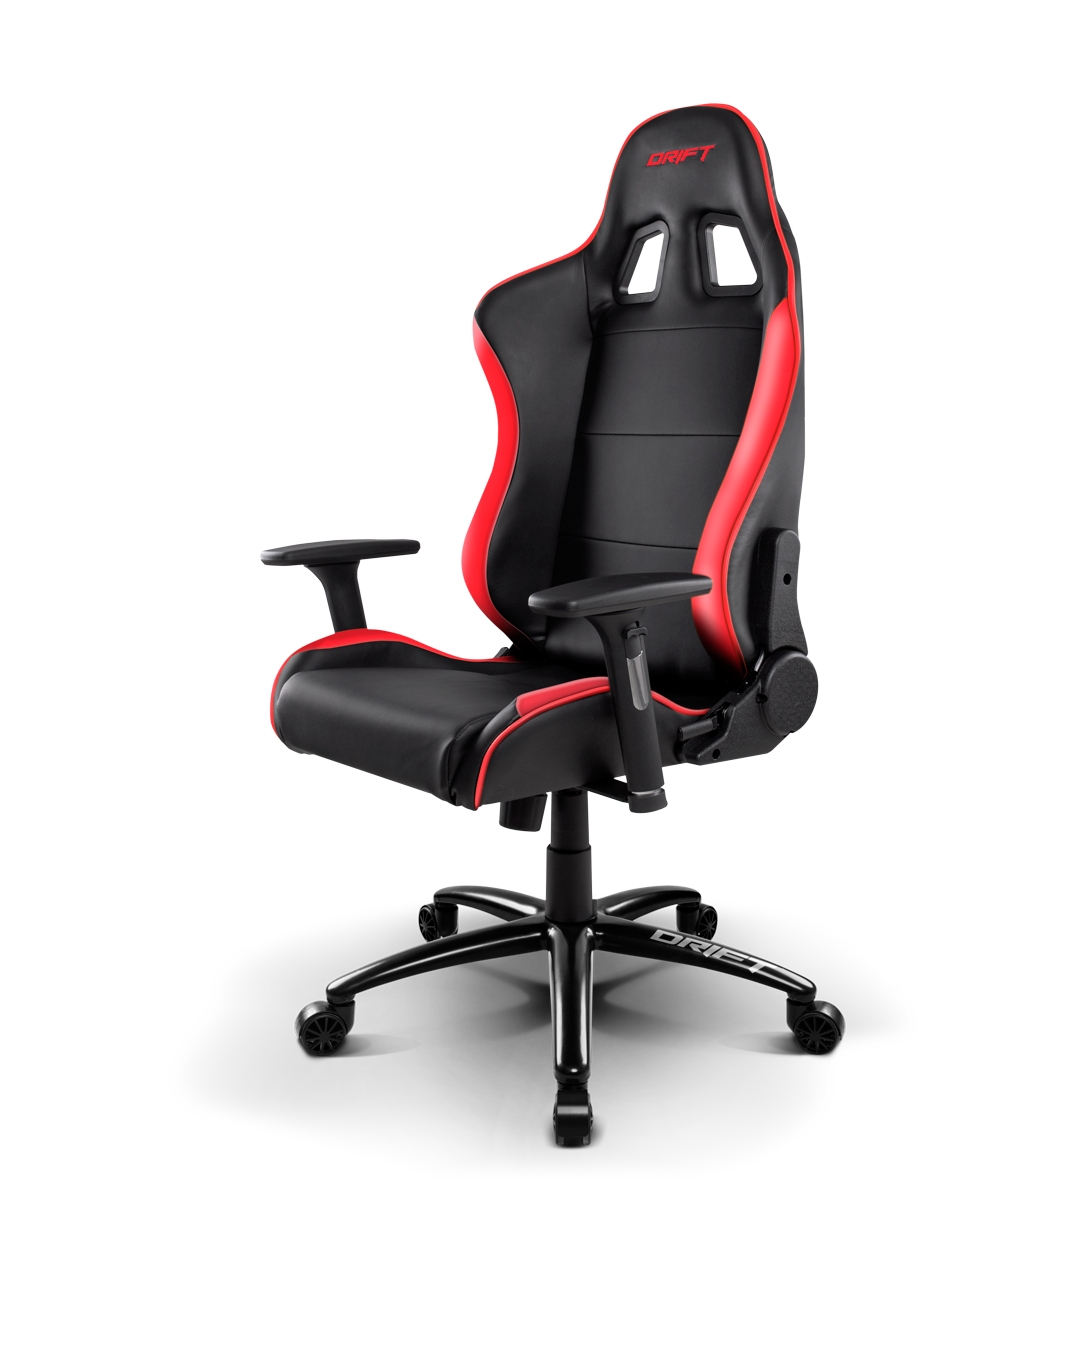 Кресло drift. Кресло игровое Drift dr100. Кресло игровое (компьютерное)Drift dr100 Fabric Black Red. Геймерское кресло Drift dr111. Игровое кресло Drift dr175.